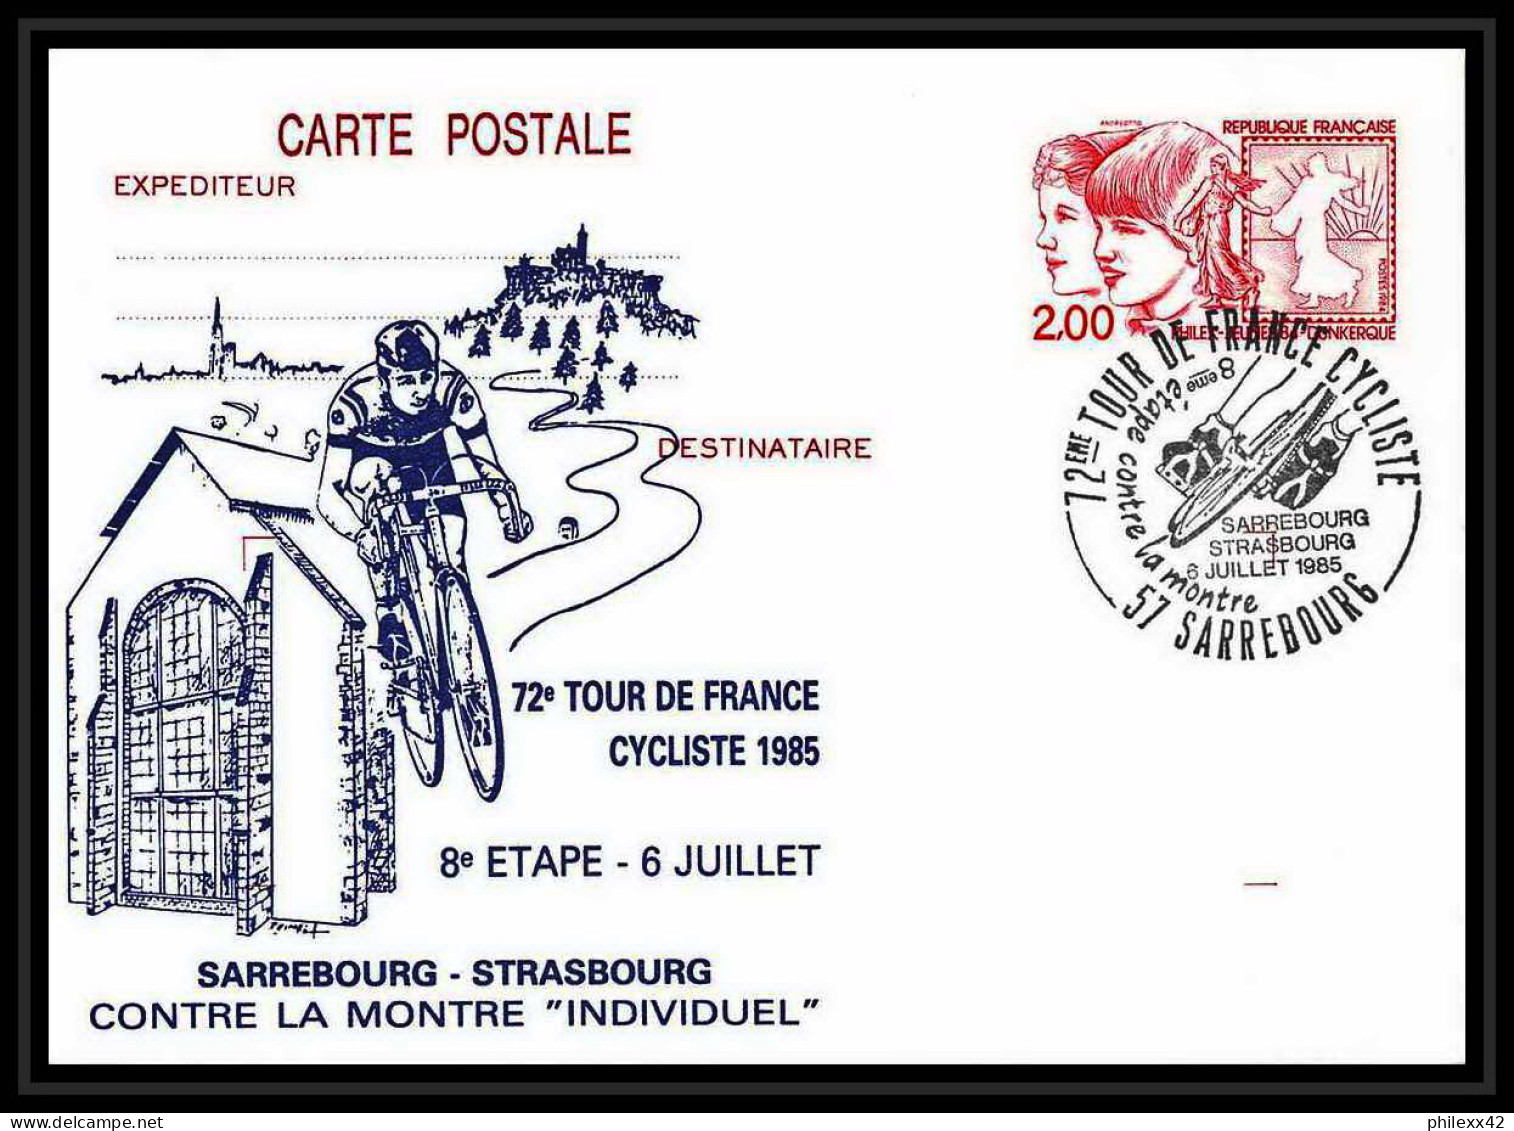 0485 France Entier postal Stationery 2308 philexjeune 84 Belle COLLECTION 8 Cartes Différentes